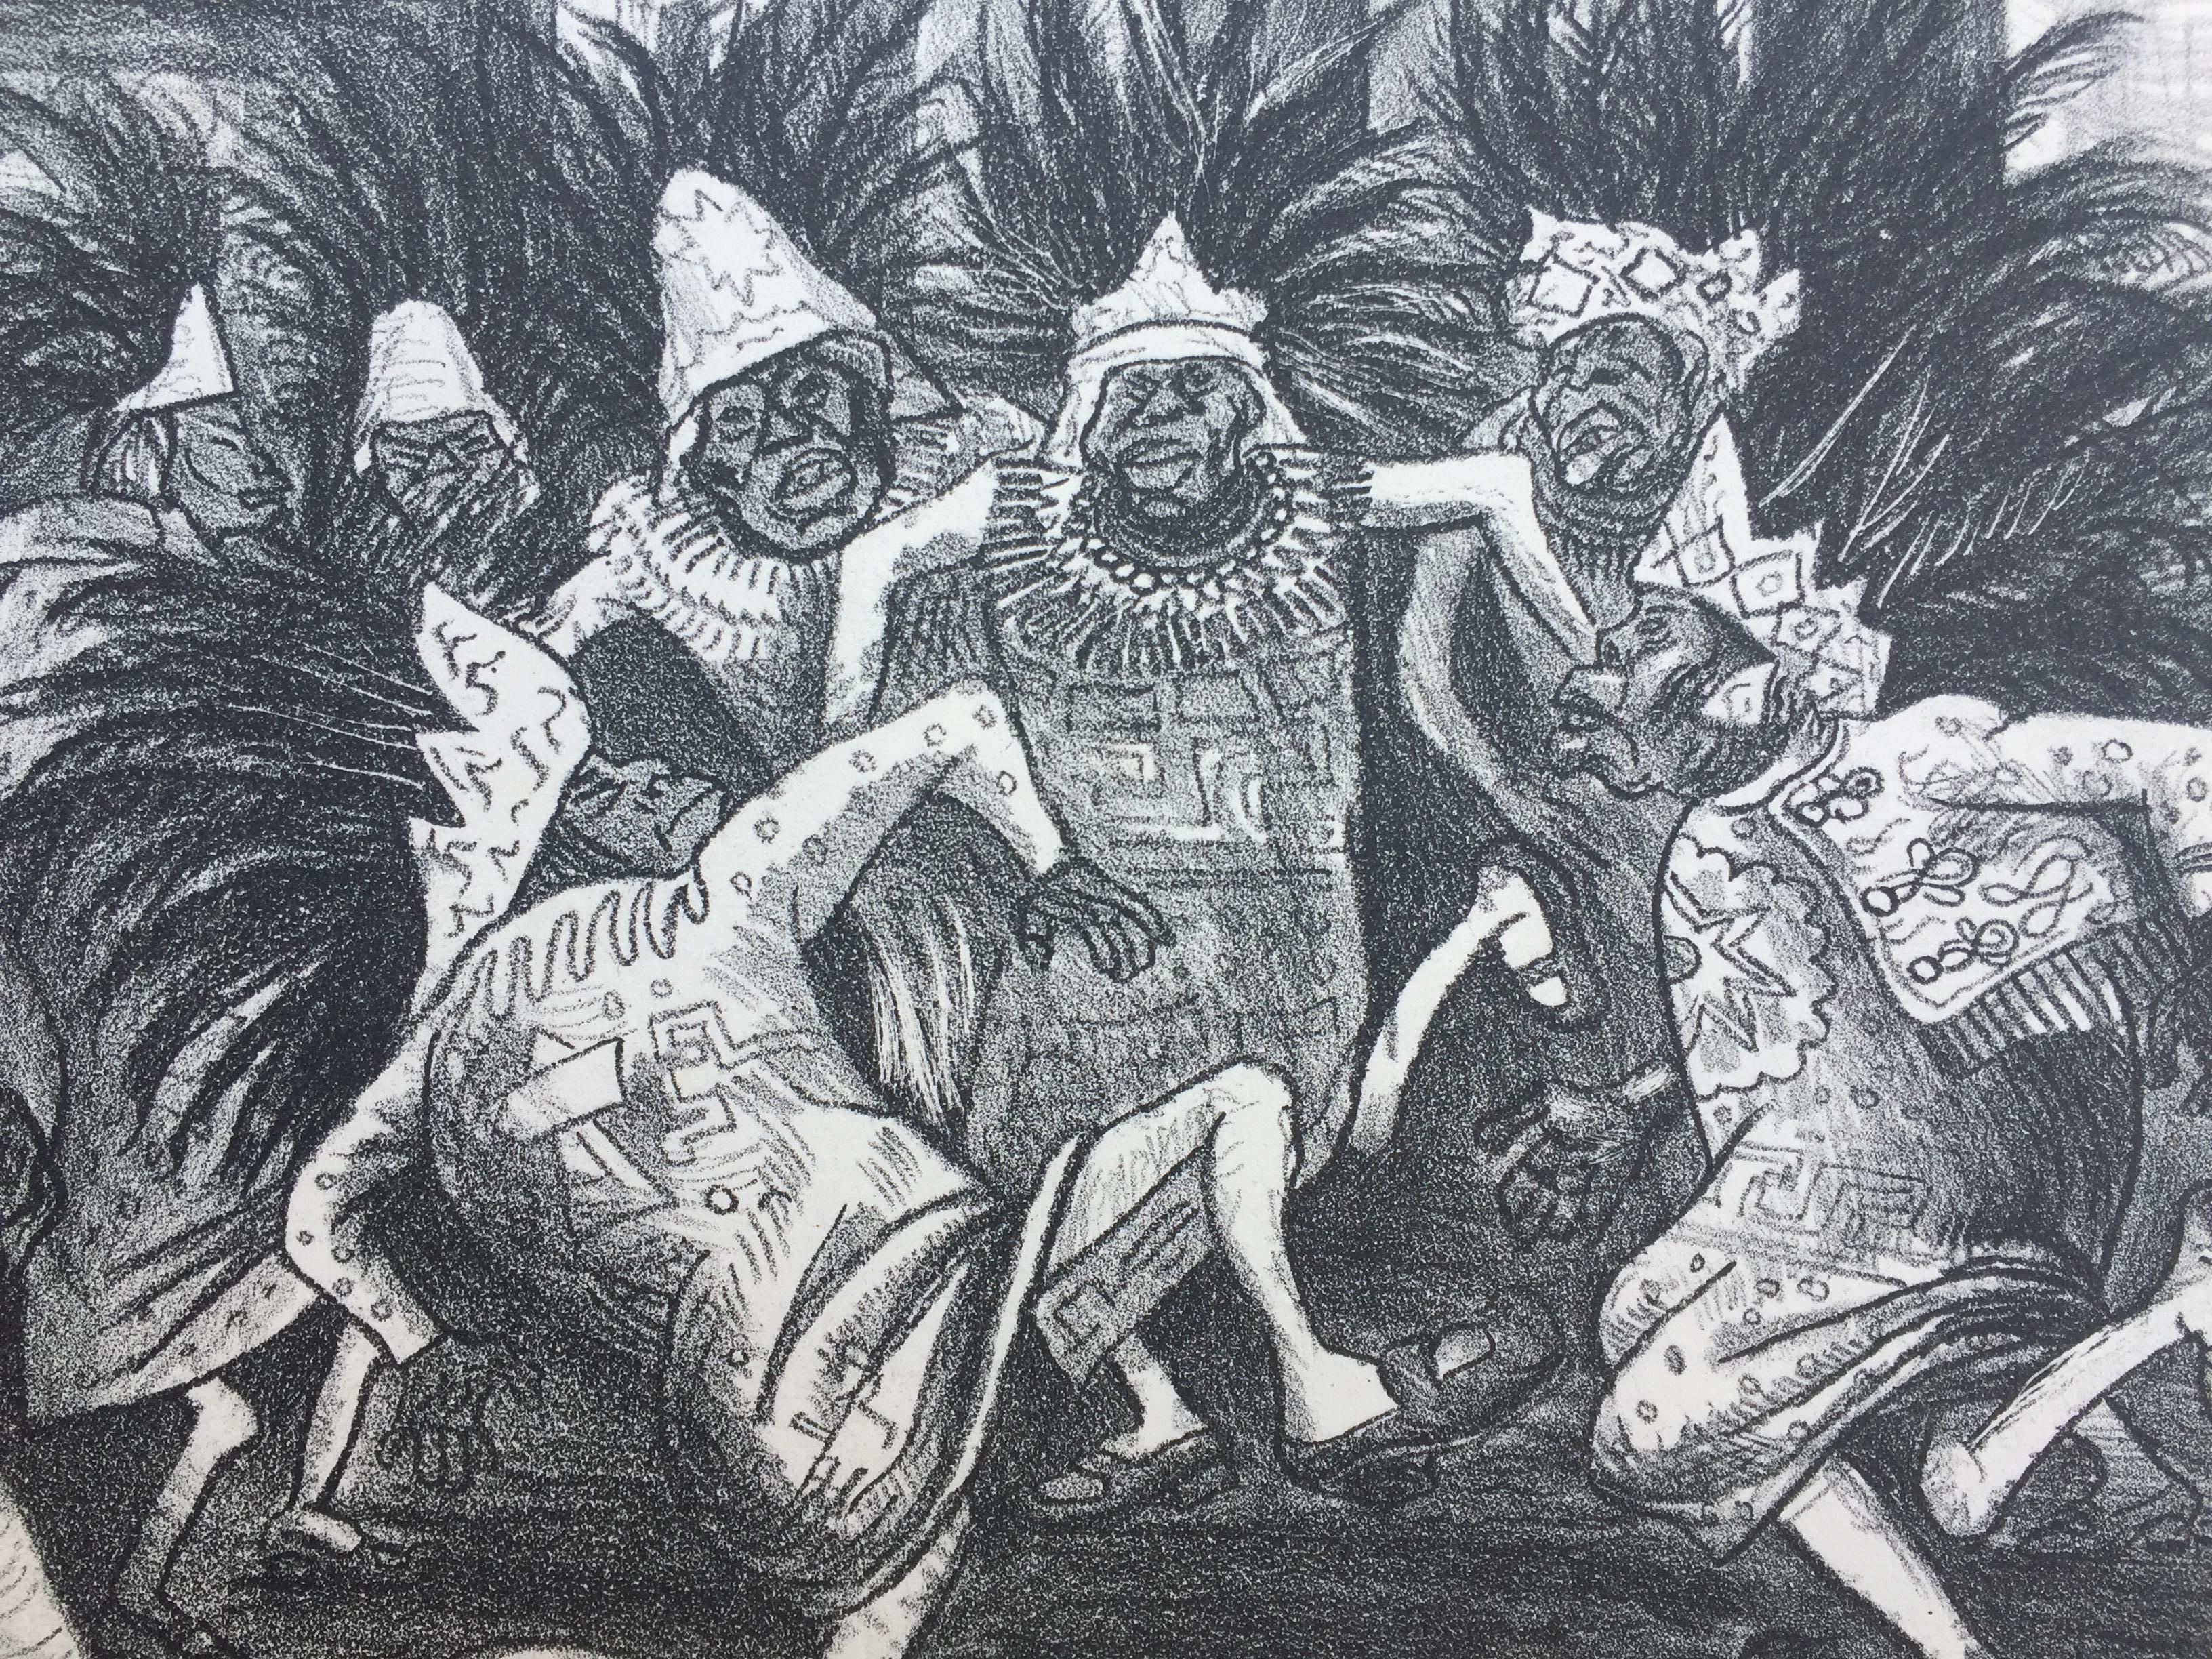 DANCING INDIANS / ECHATE La OTRA,  - Modern Print by Jose Clemente Orozco